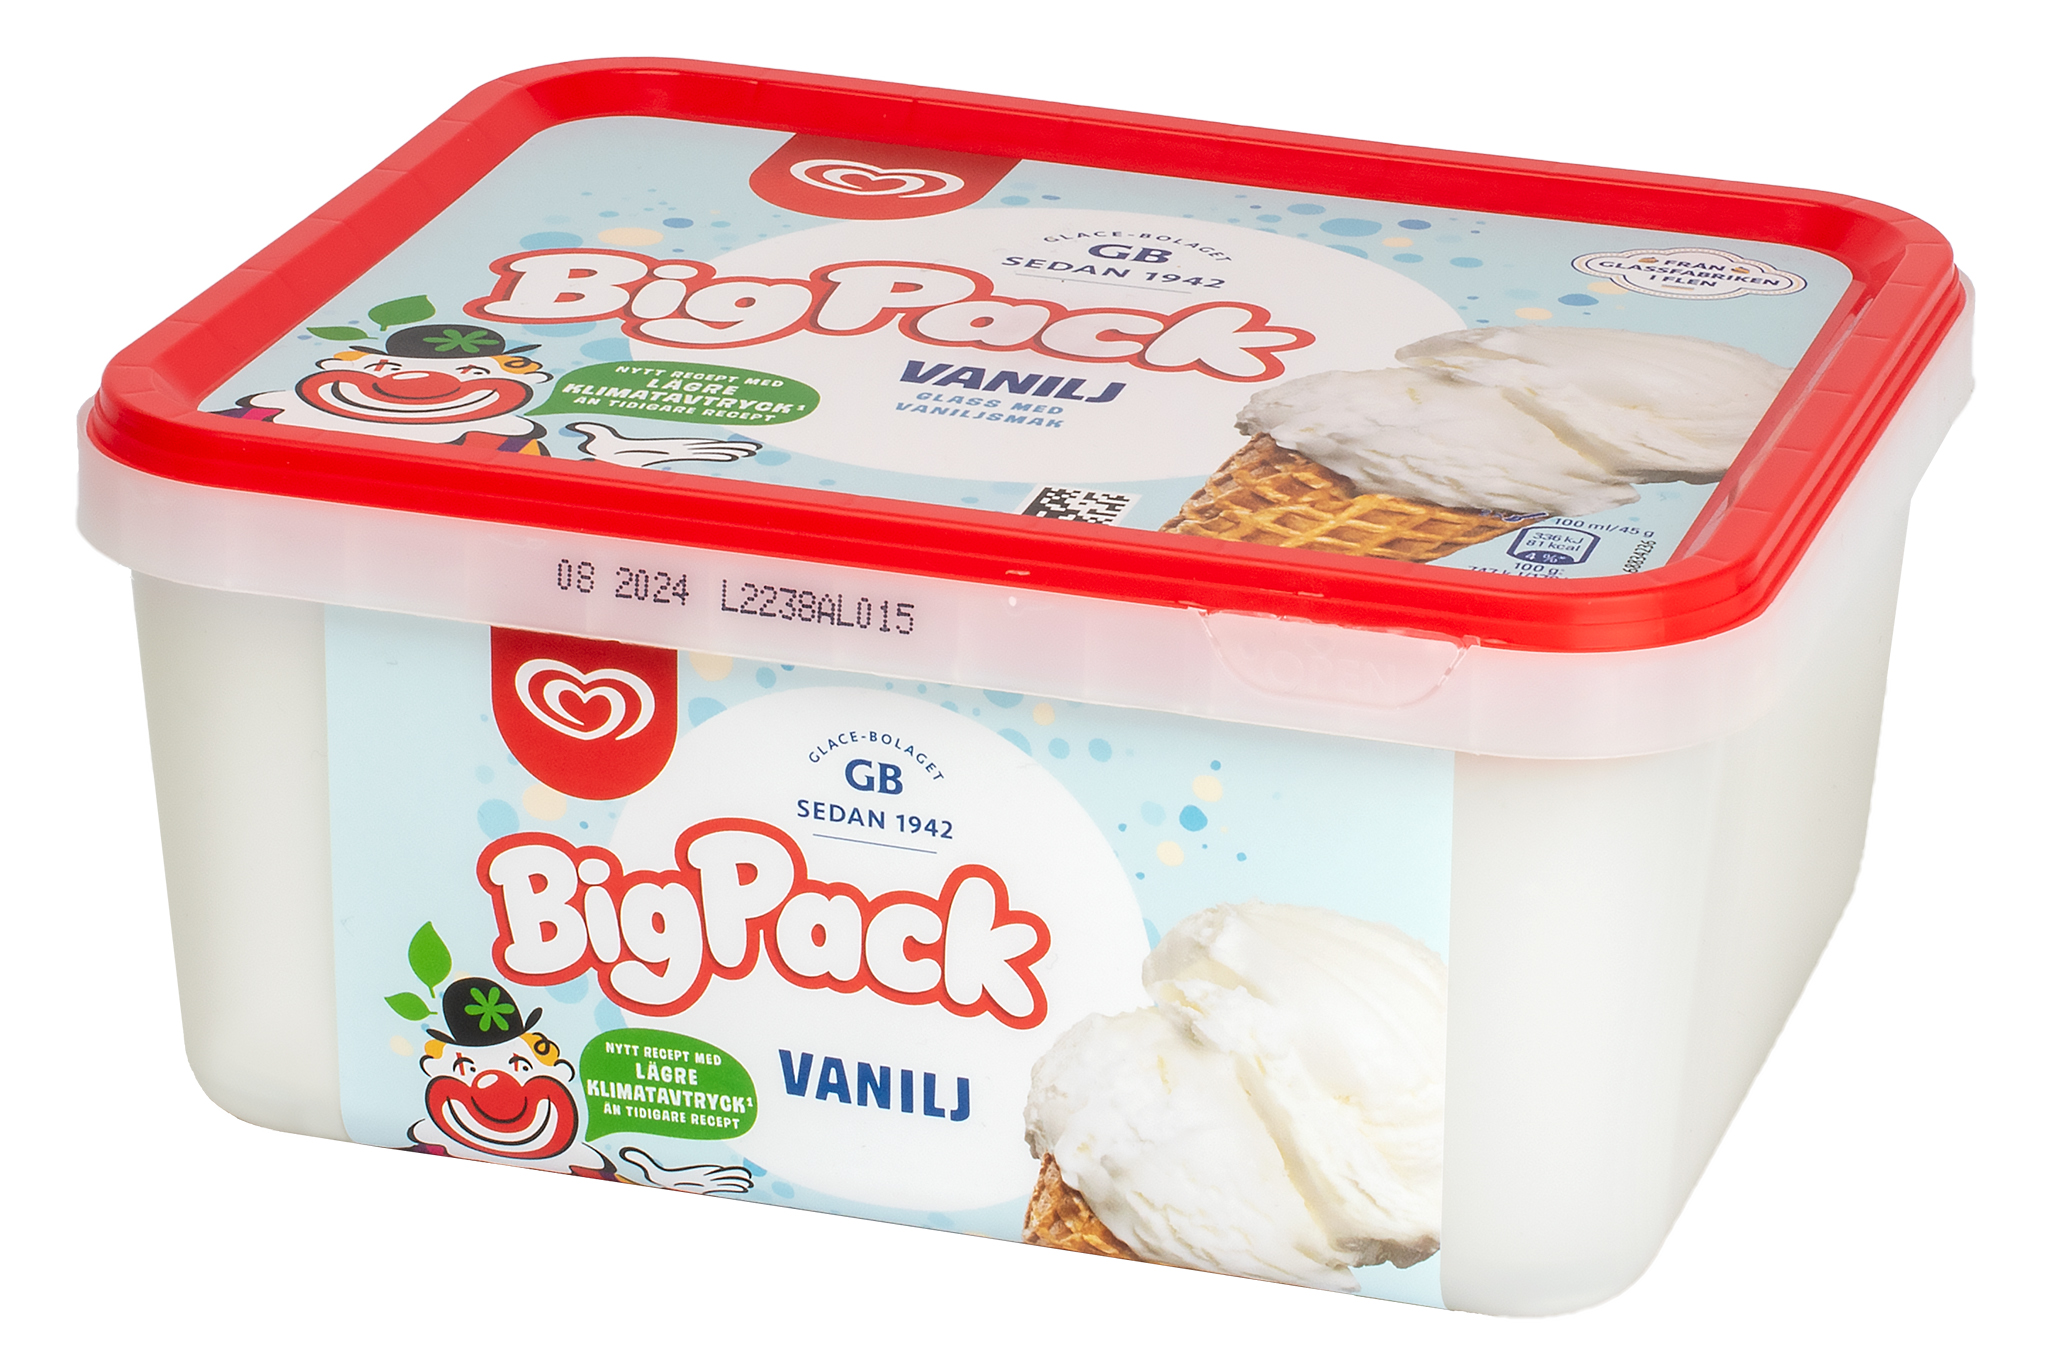 GB Glace Big pack vanilj